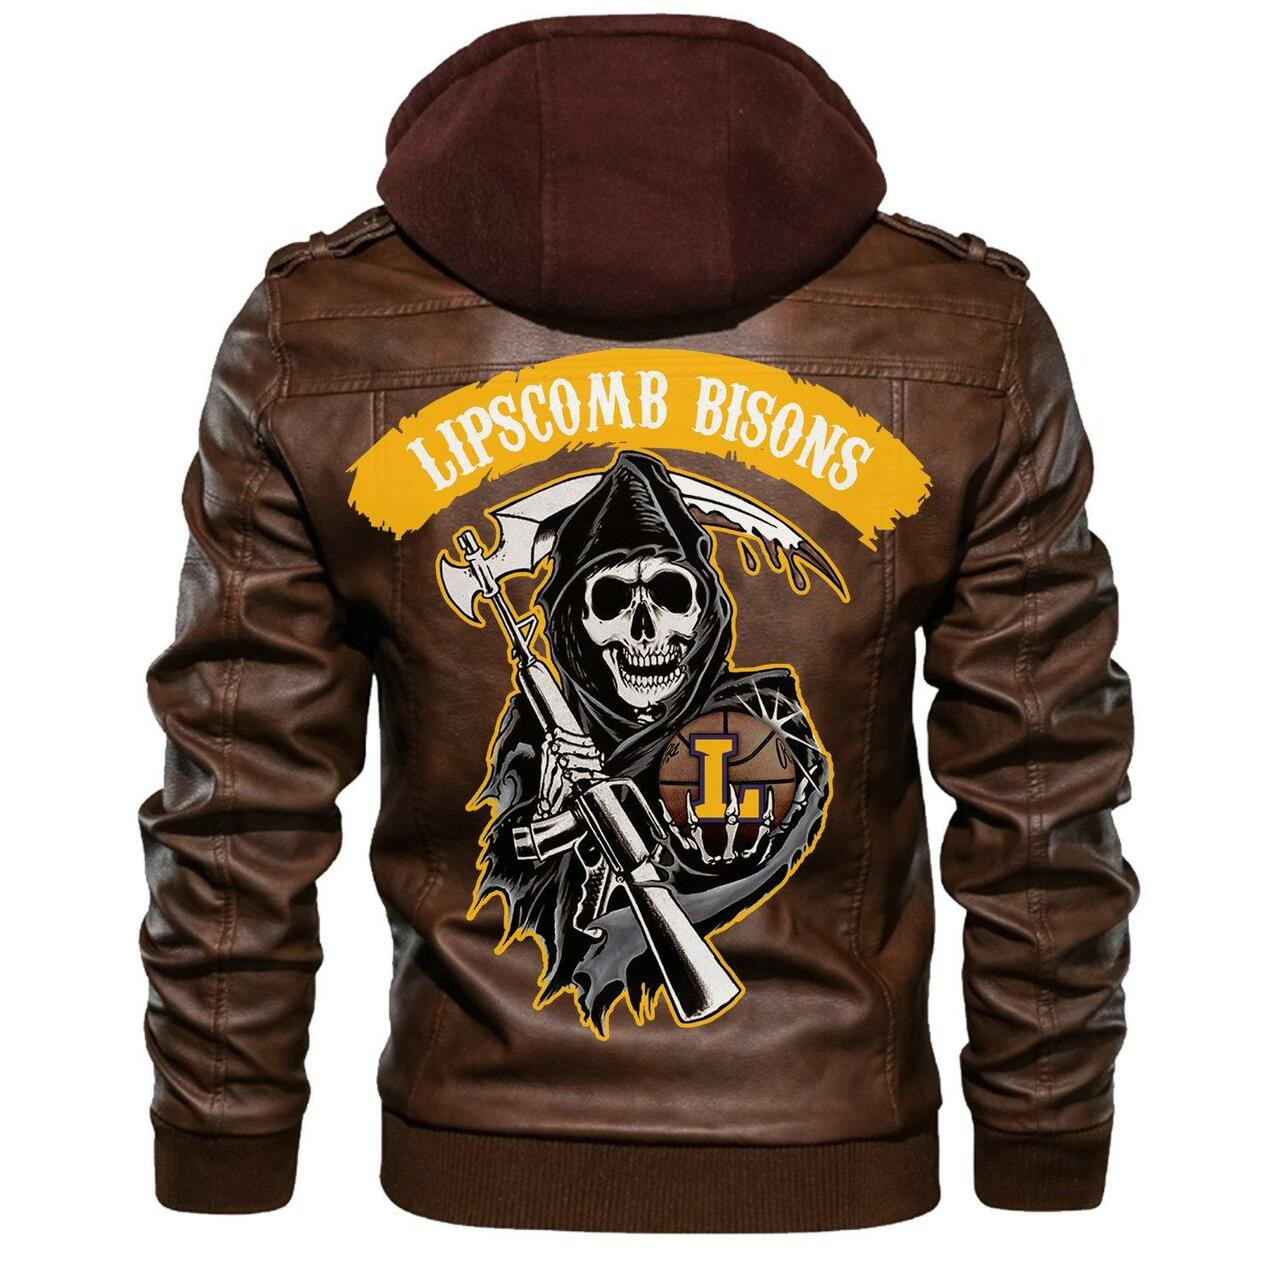 Top leather jacket Sells Best on Techcomshop 28